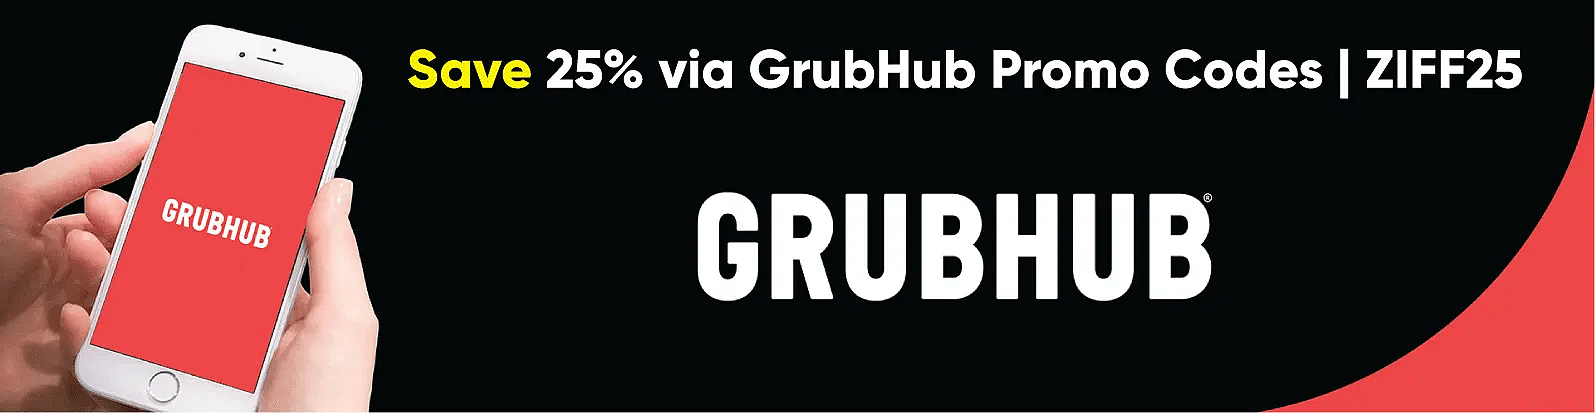 grubhub-gift-card-code-2021-redeem-free-grubhub-gift-card-zouton